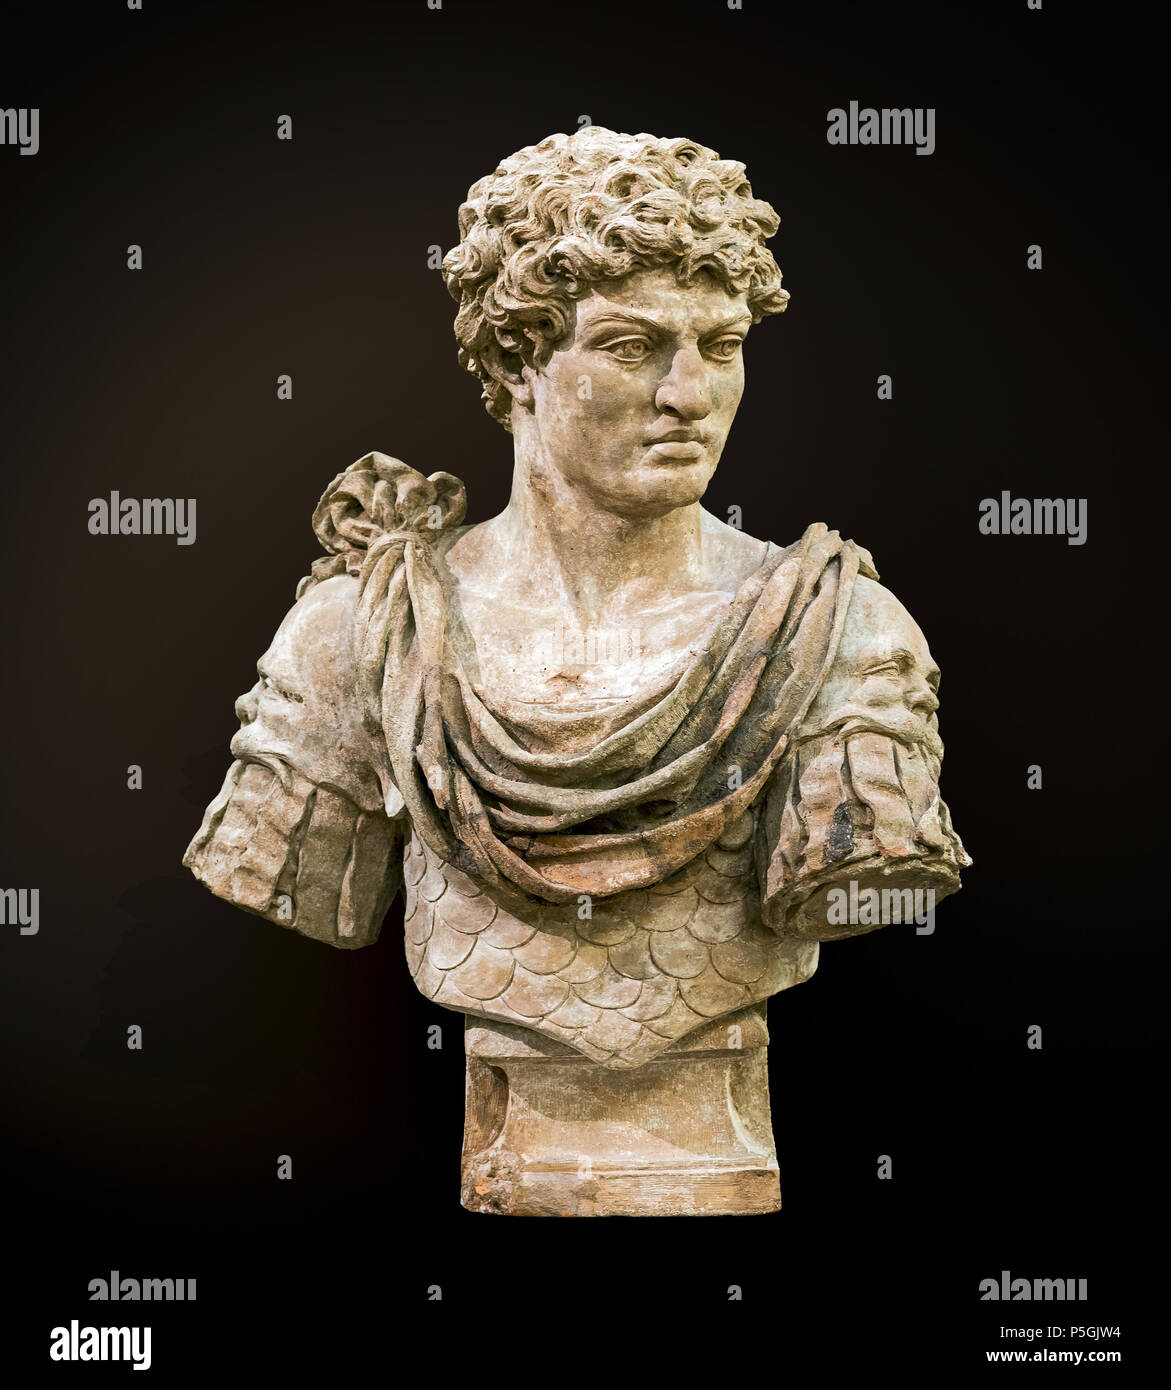 N/A N/A. N/A 151 Augustins - Marcus Antonius Primus by Marc Arcis Stock Photo